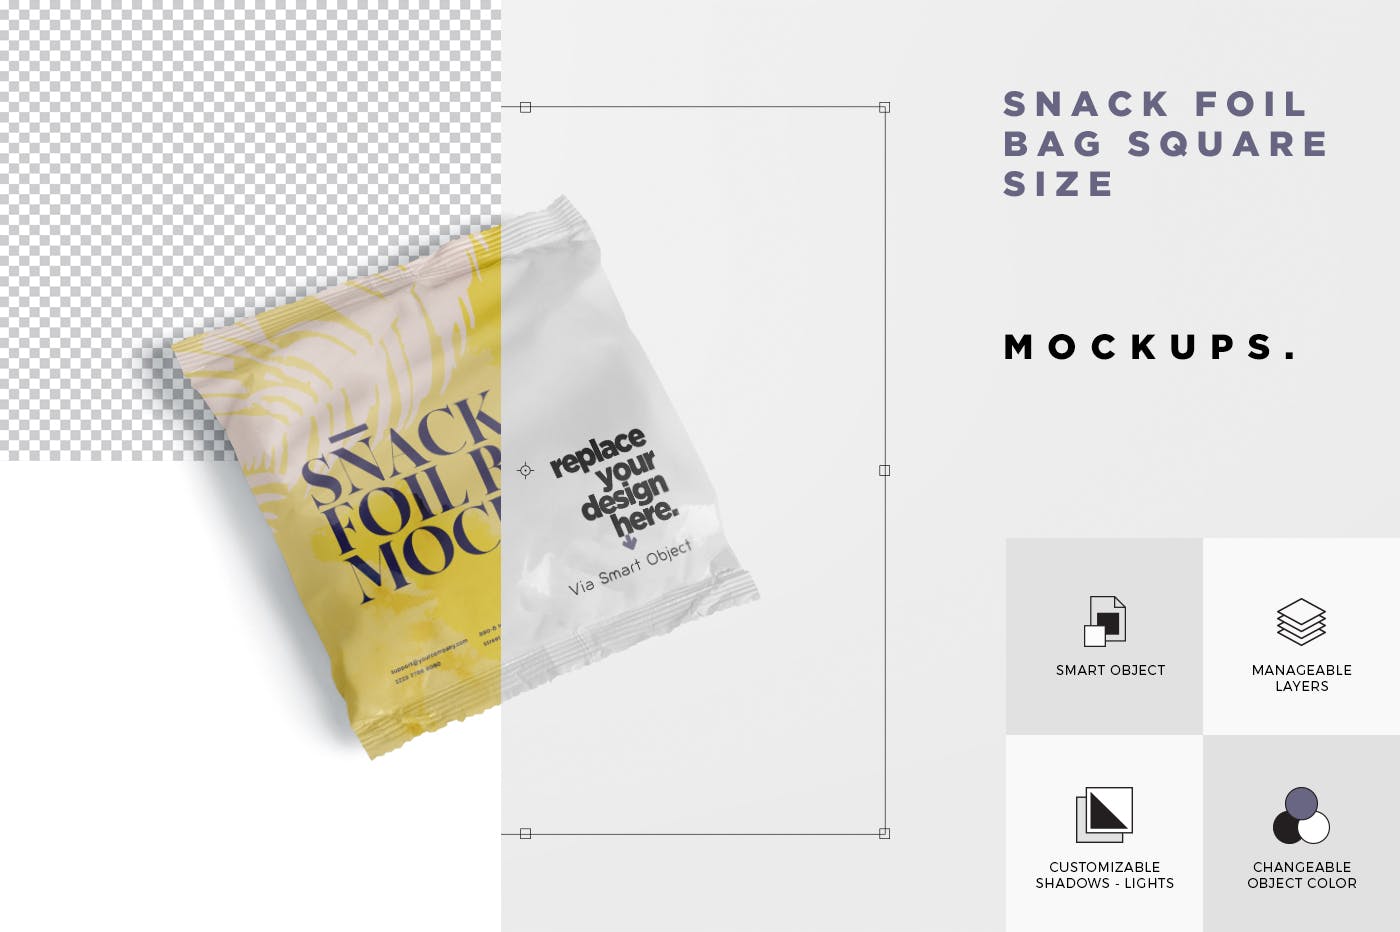 小吃零食铝箔包装袋设计图非凡图库精选 Snack Foil Bag Mockup – Square Size – Small插图(6)